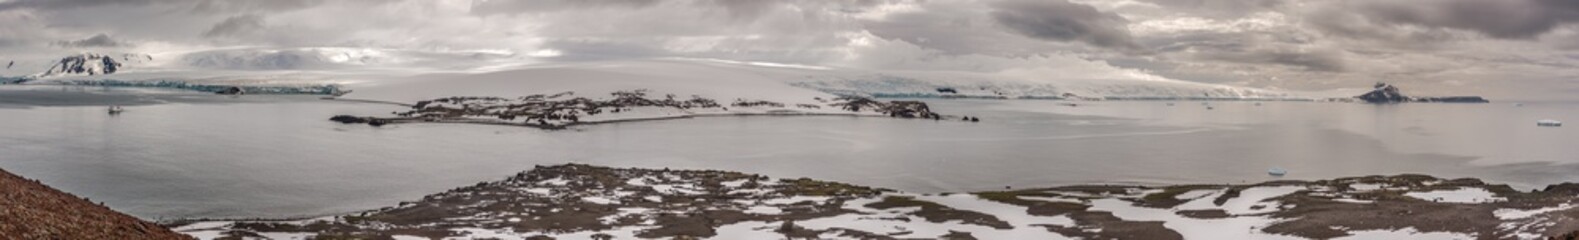 Penguin island panorama